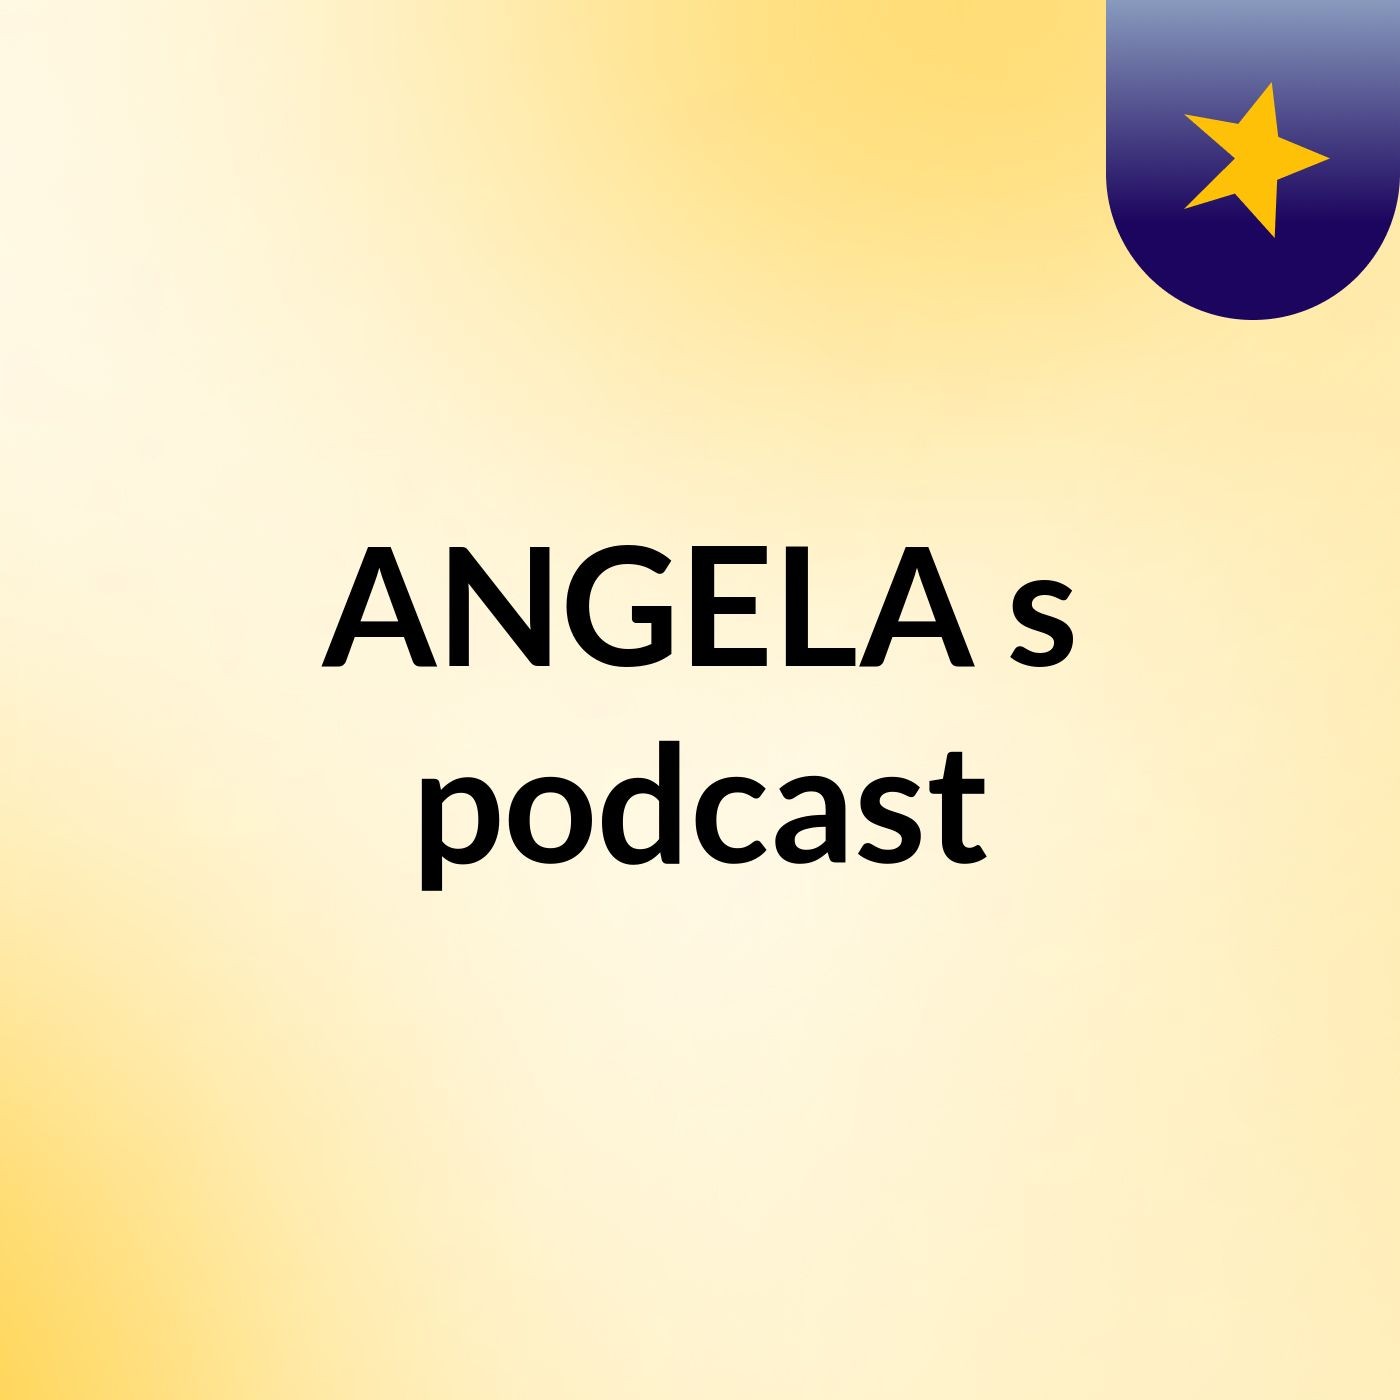 ANGELA's podcast